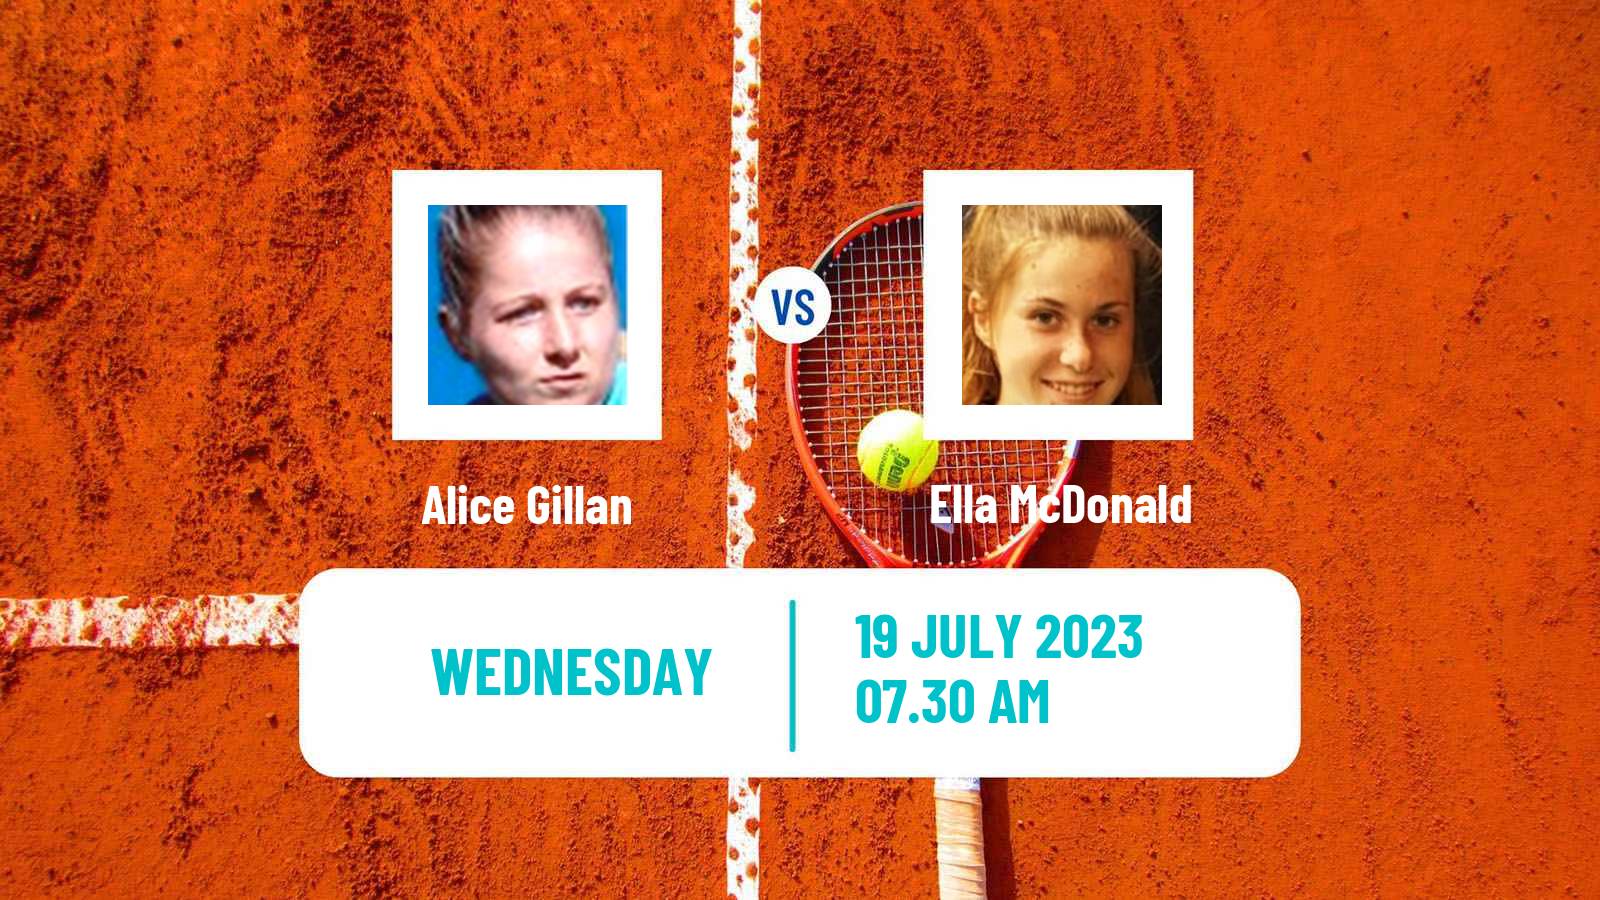 Tennis ITF W25 Roehampton Women Alice Gillan - Ella McDonald